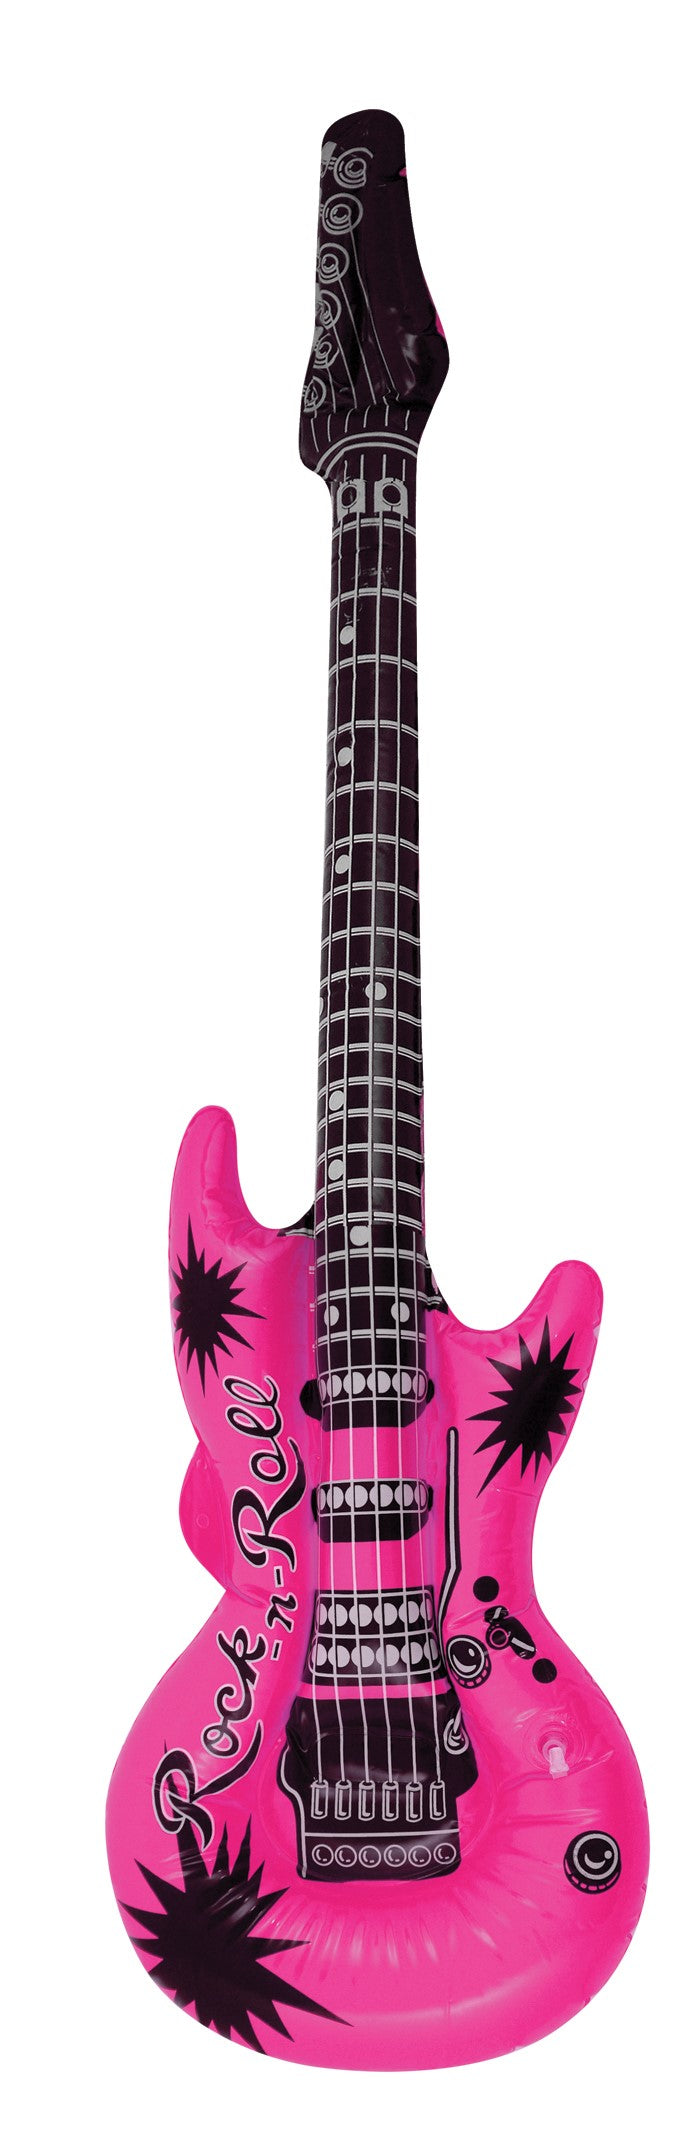 4x Inflatable Guitars 95cm Rock / Pop Star Fancy Dress Accessory